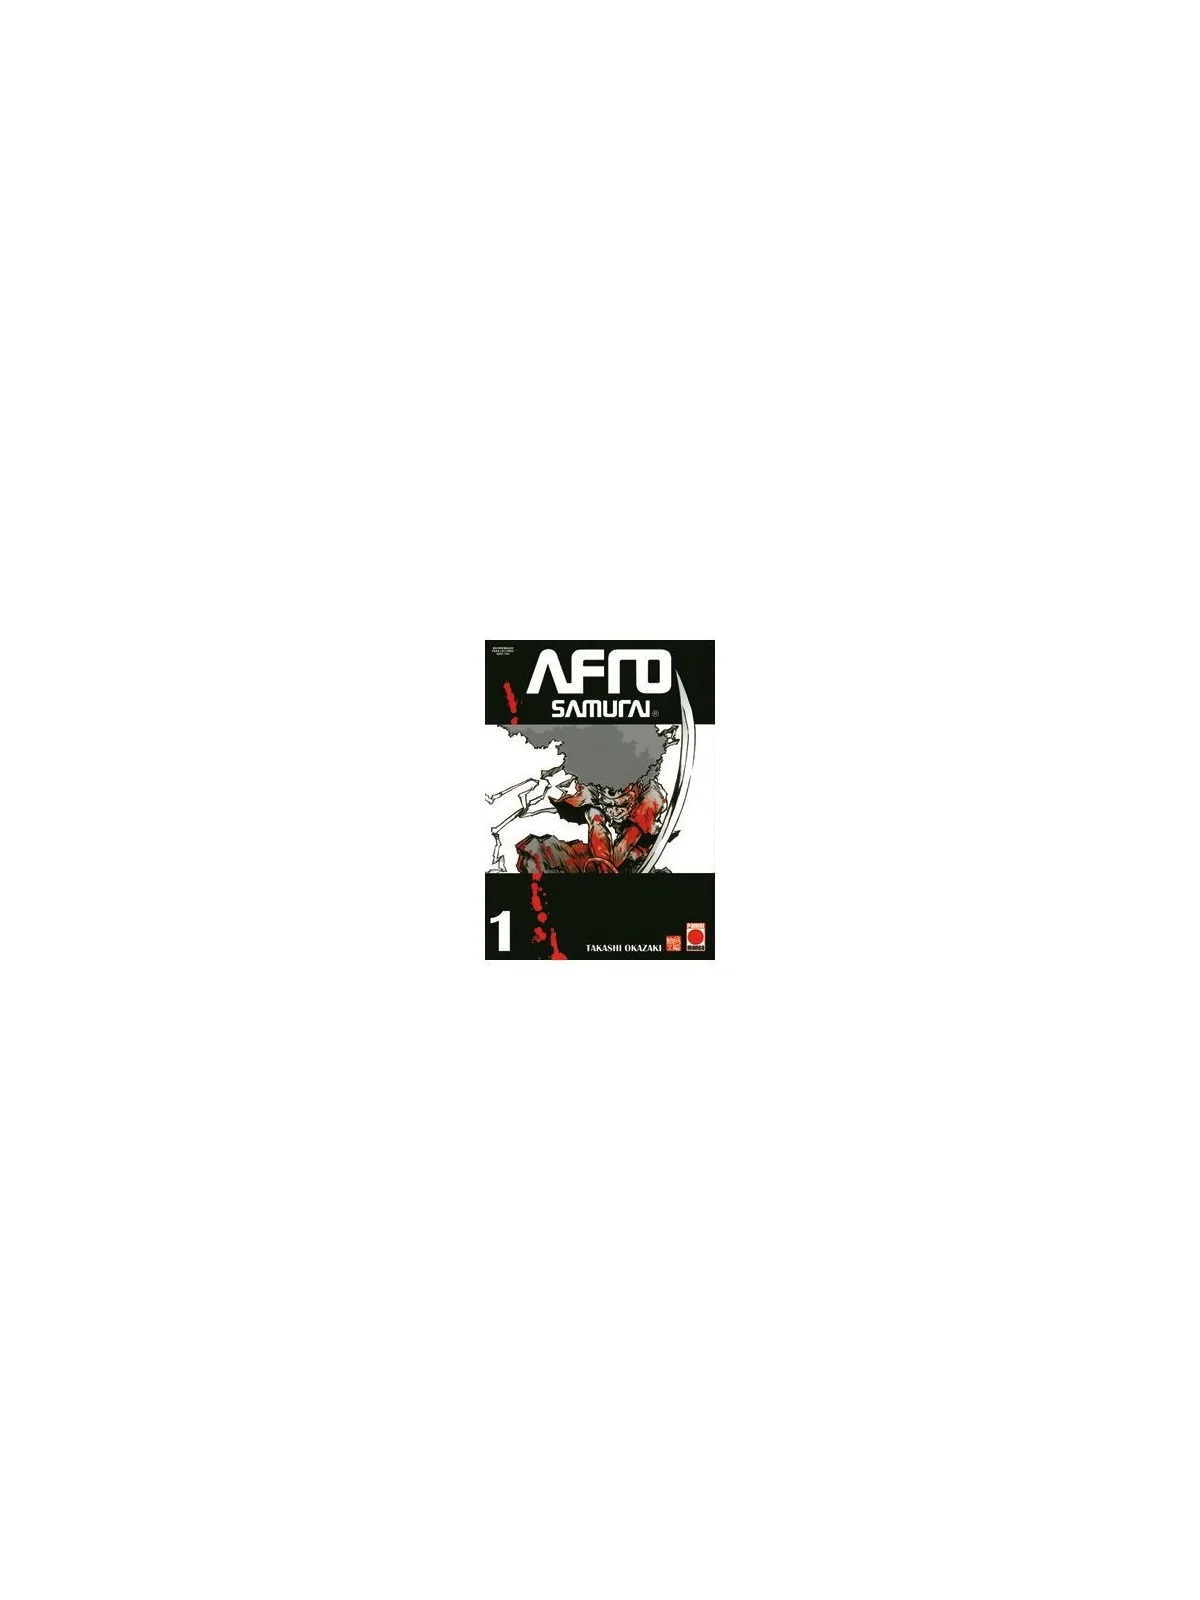 Comprar Afro Samurai 01 (Cómic) barato al mejor precio 9,45 € de Panin